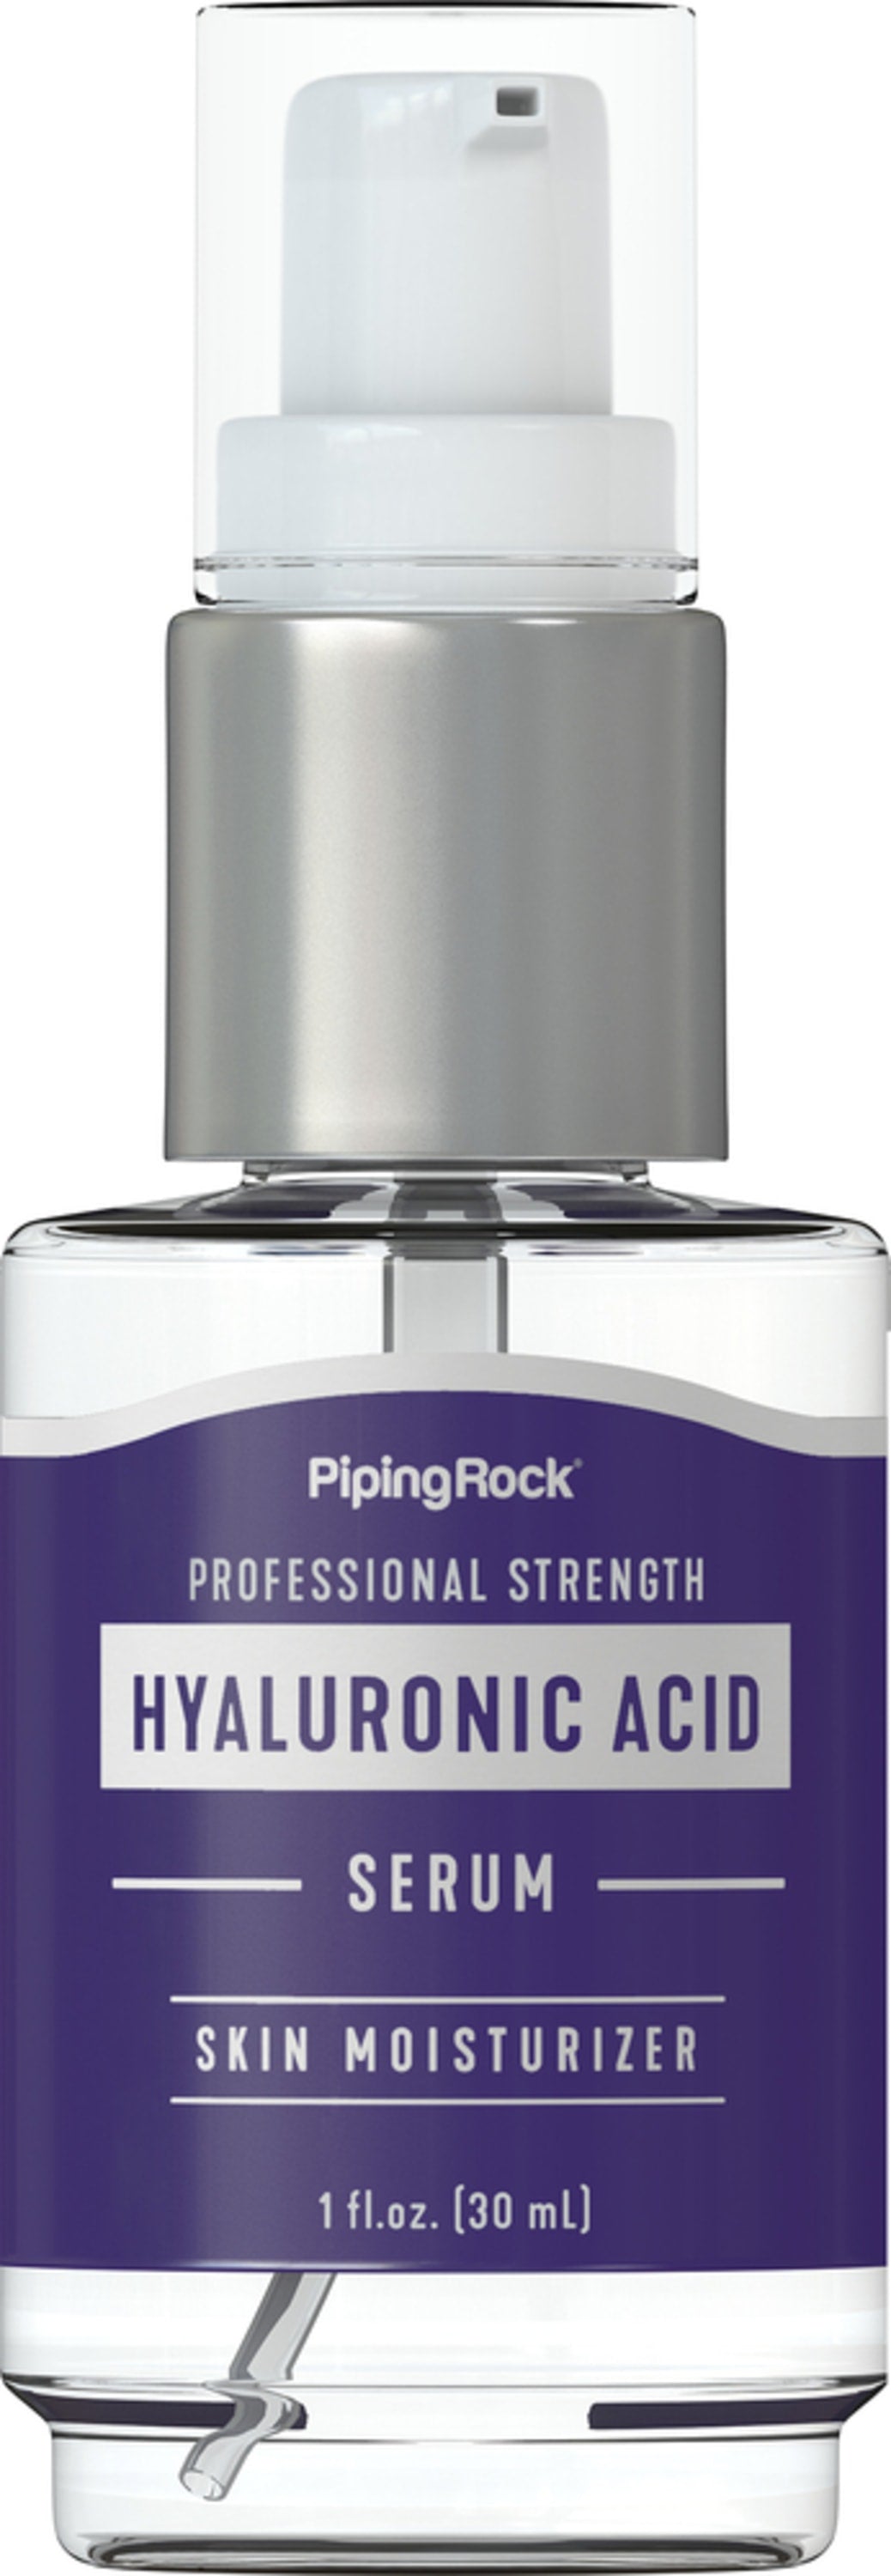 Hyaluronic Acid Serum, 1 fl oz (30 mL) Pump Bottle